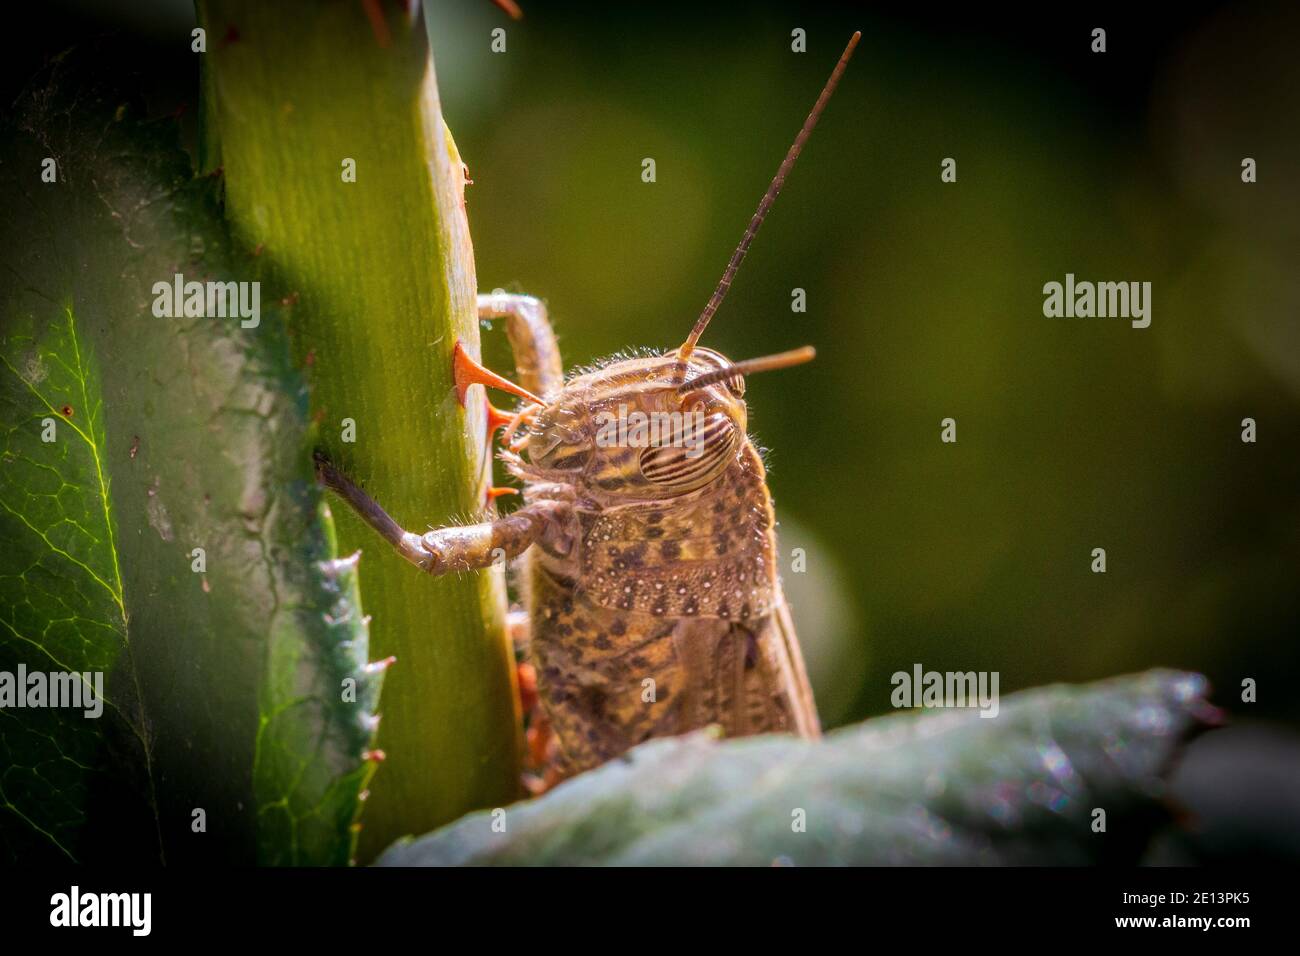 Anacridium aegyptium, Egyptian locust Stock Photo